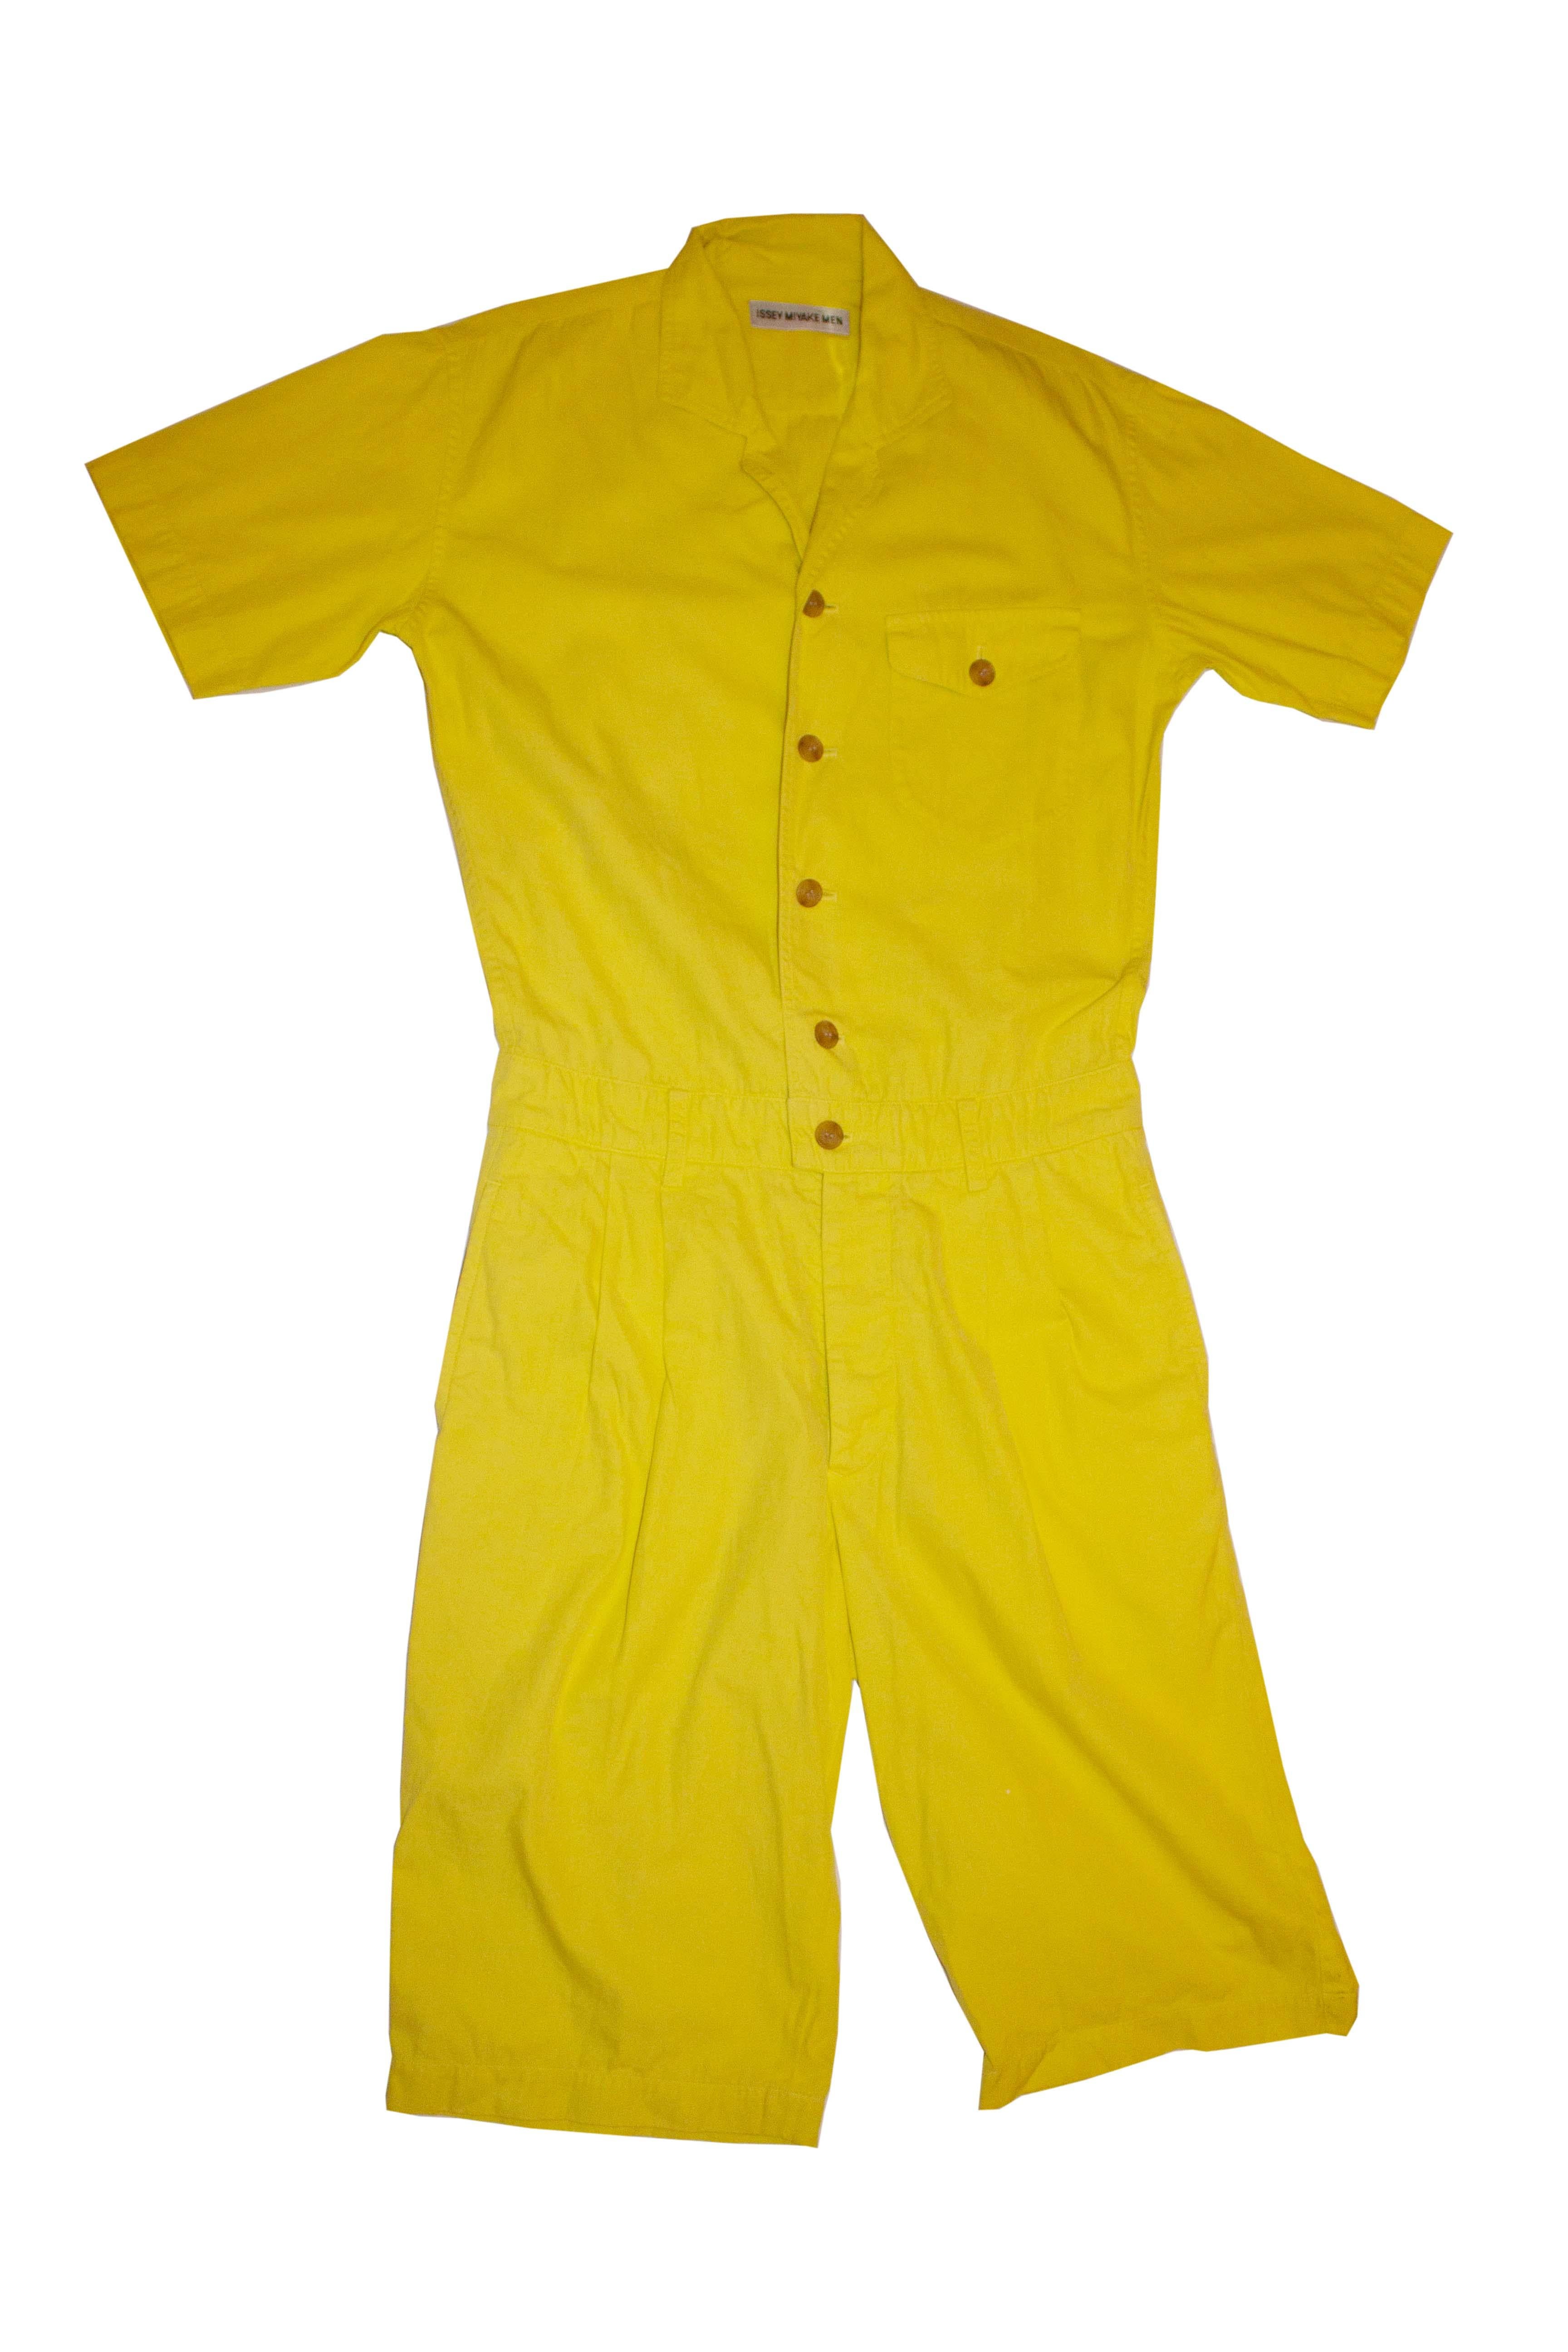 yellow jumpsuit for men